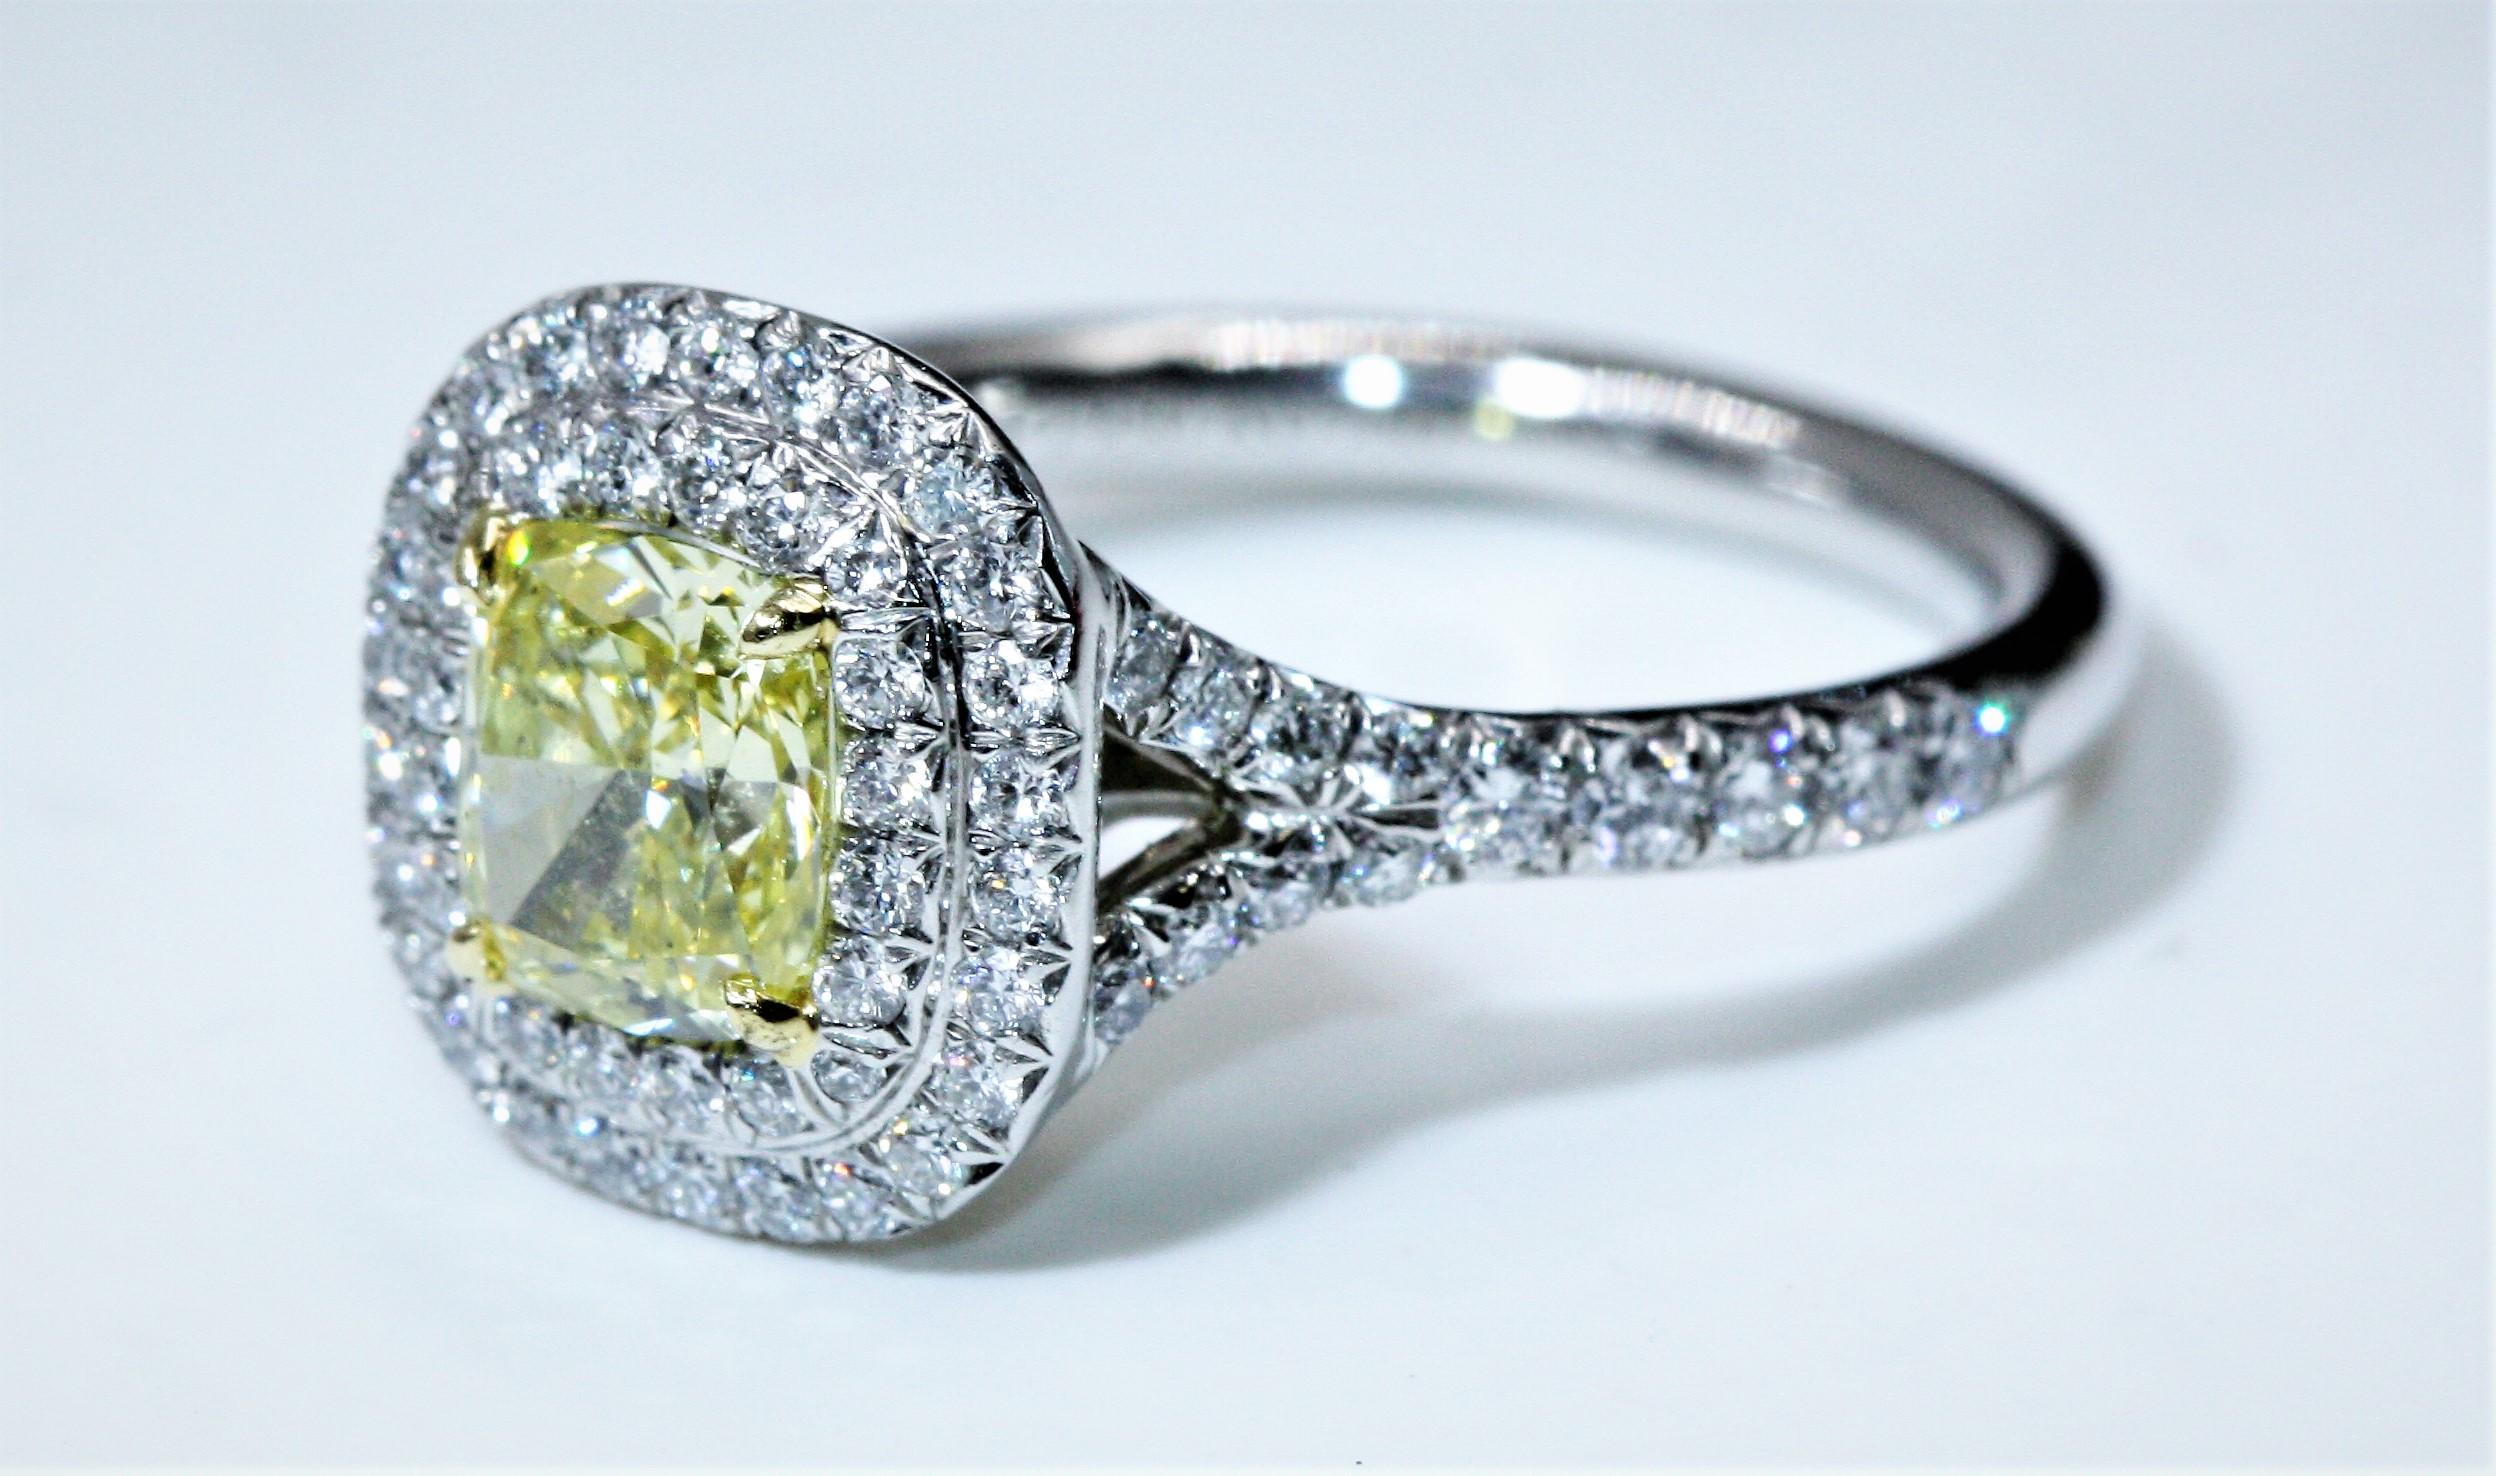 Tiffany & Co. Square Fancy Intense Yellow Diamond Ring 0.92 Carat, VS2 For Sale 1